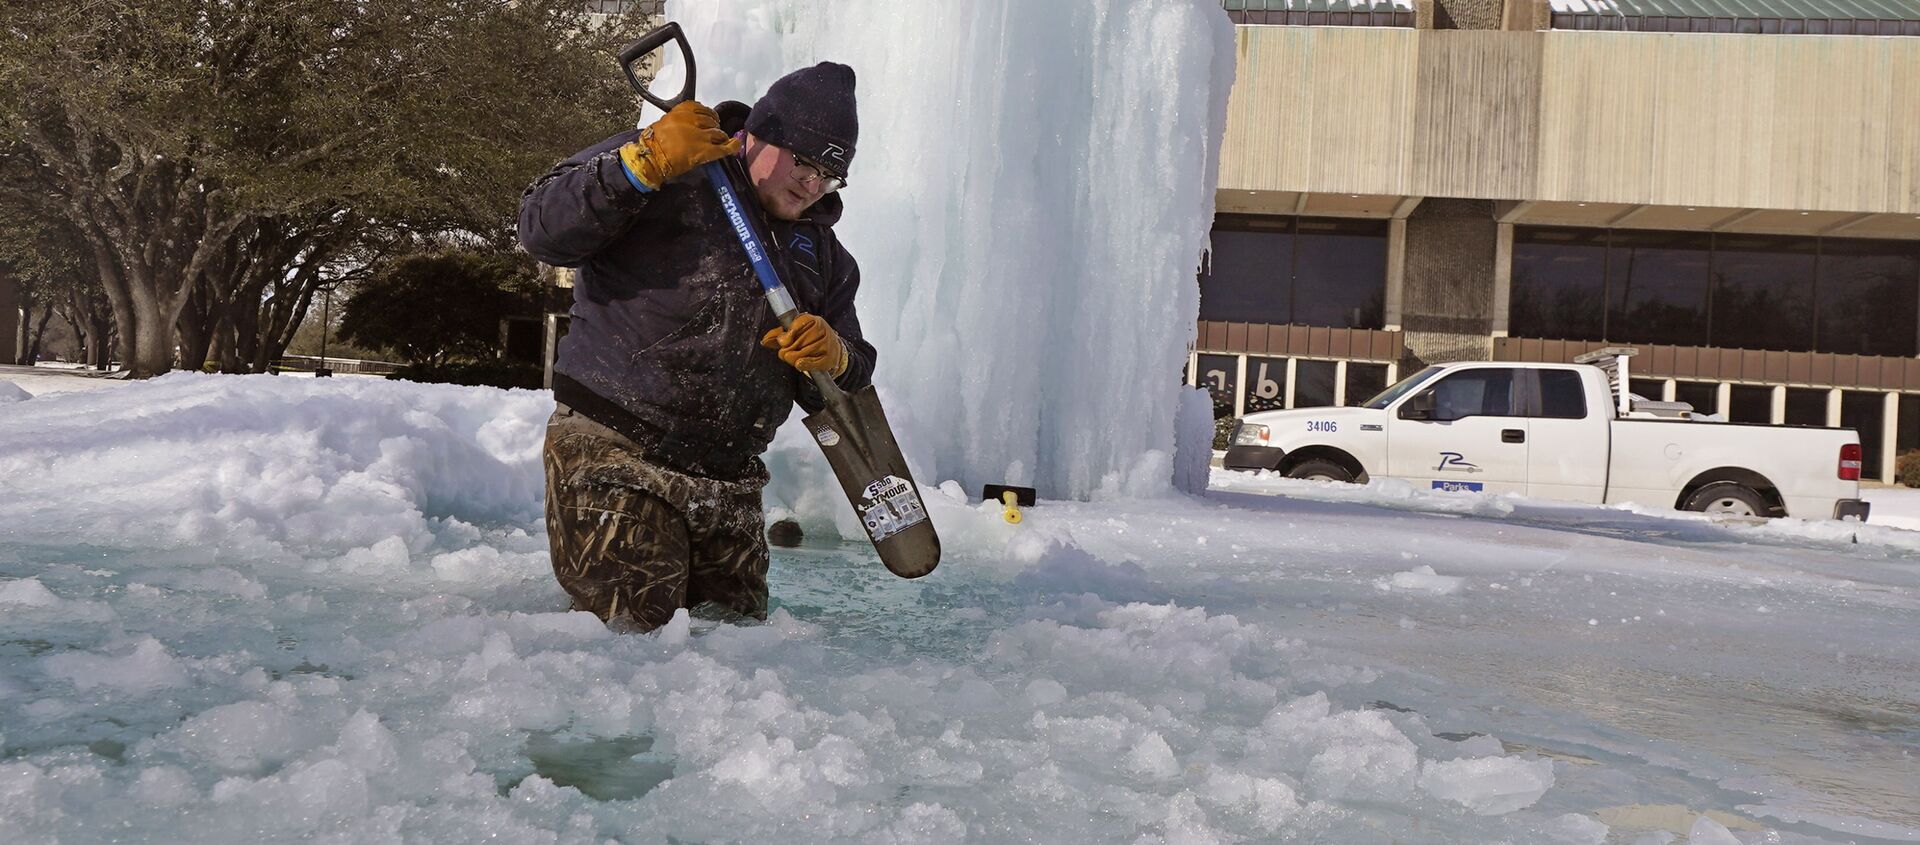 City of Richardson worker Kaleb Love breaks ice on a frozen fountain Tuesday, Feb. 16, 2021, in Richardson, Texas - Sputnik International, 1920, 17.02.2021